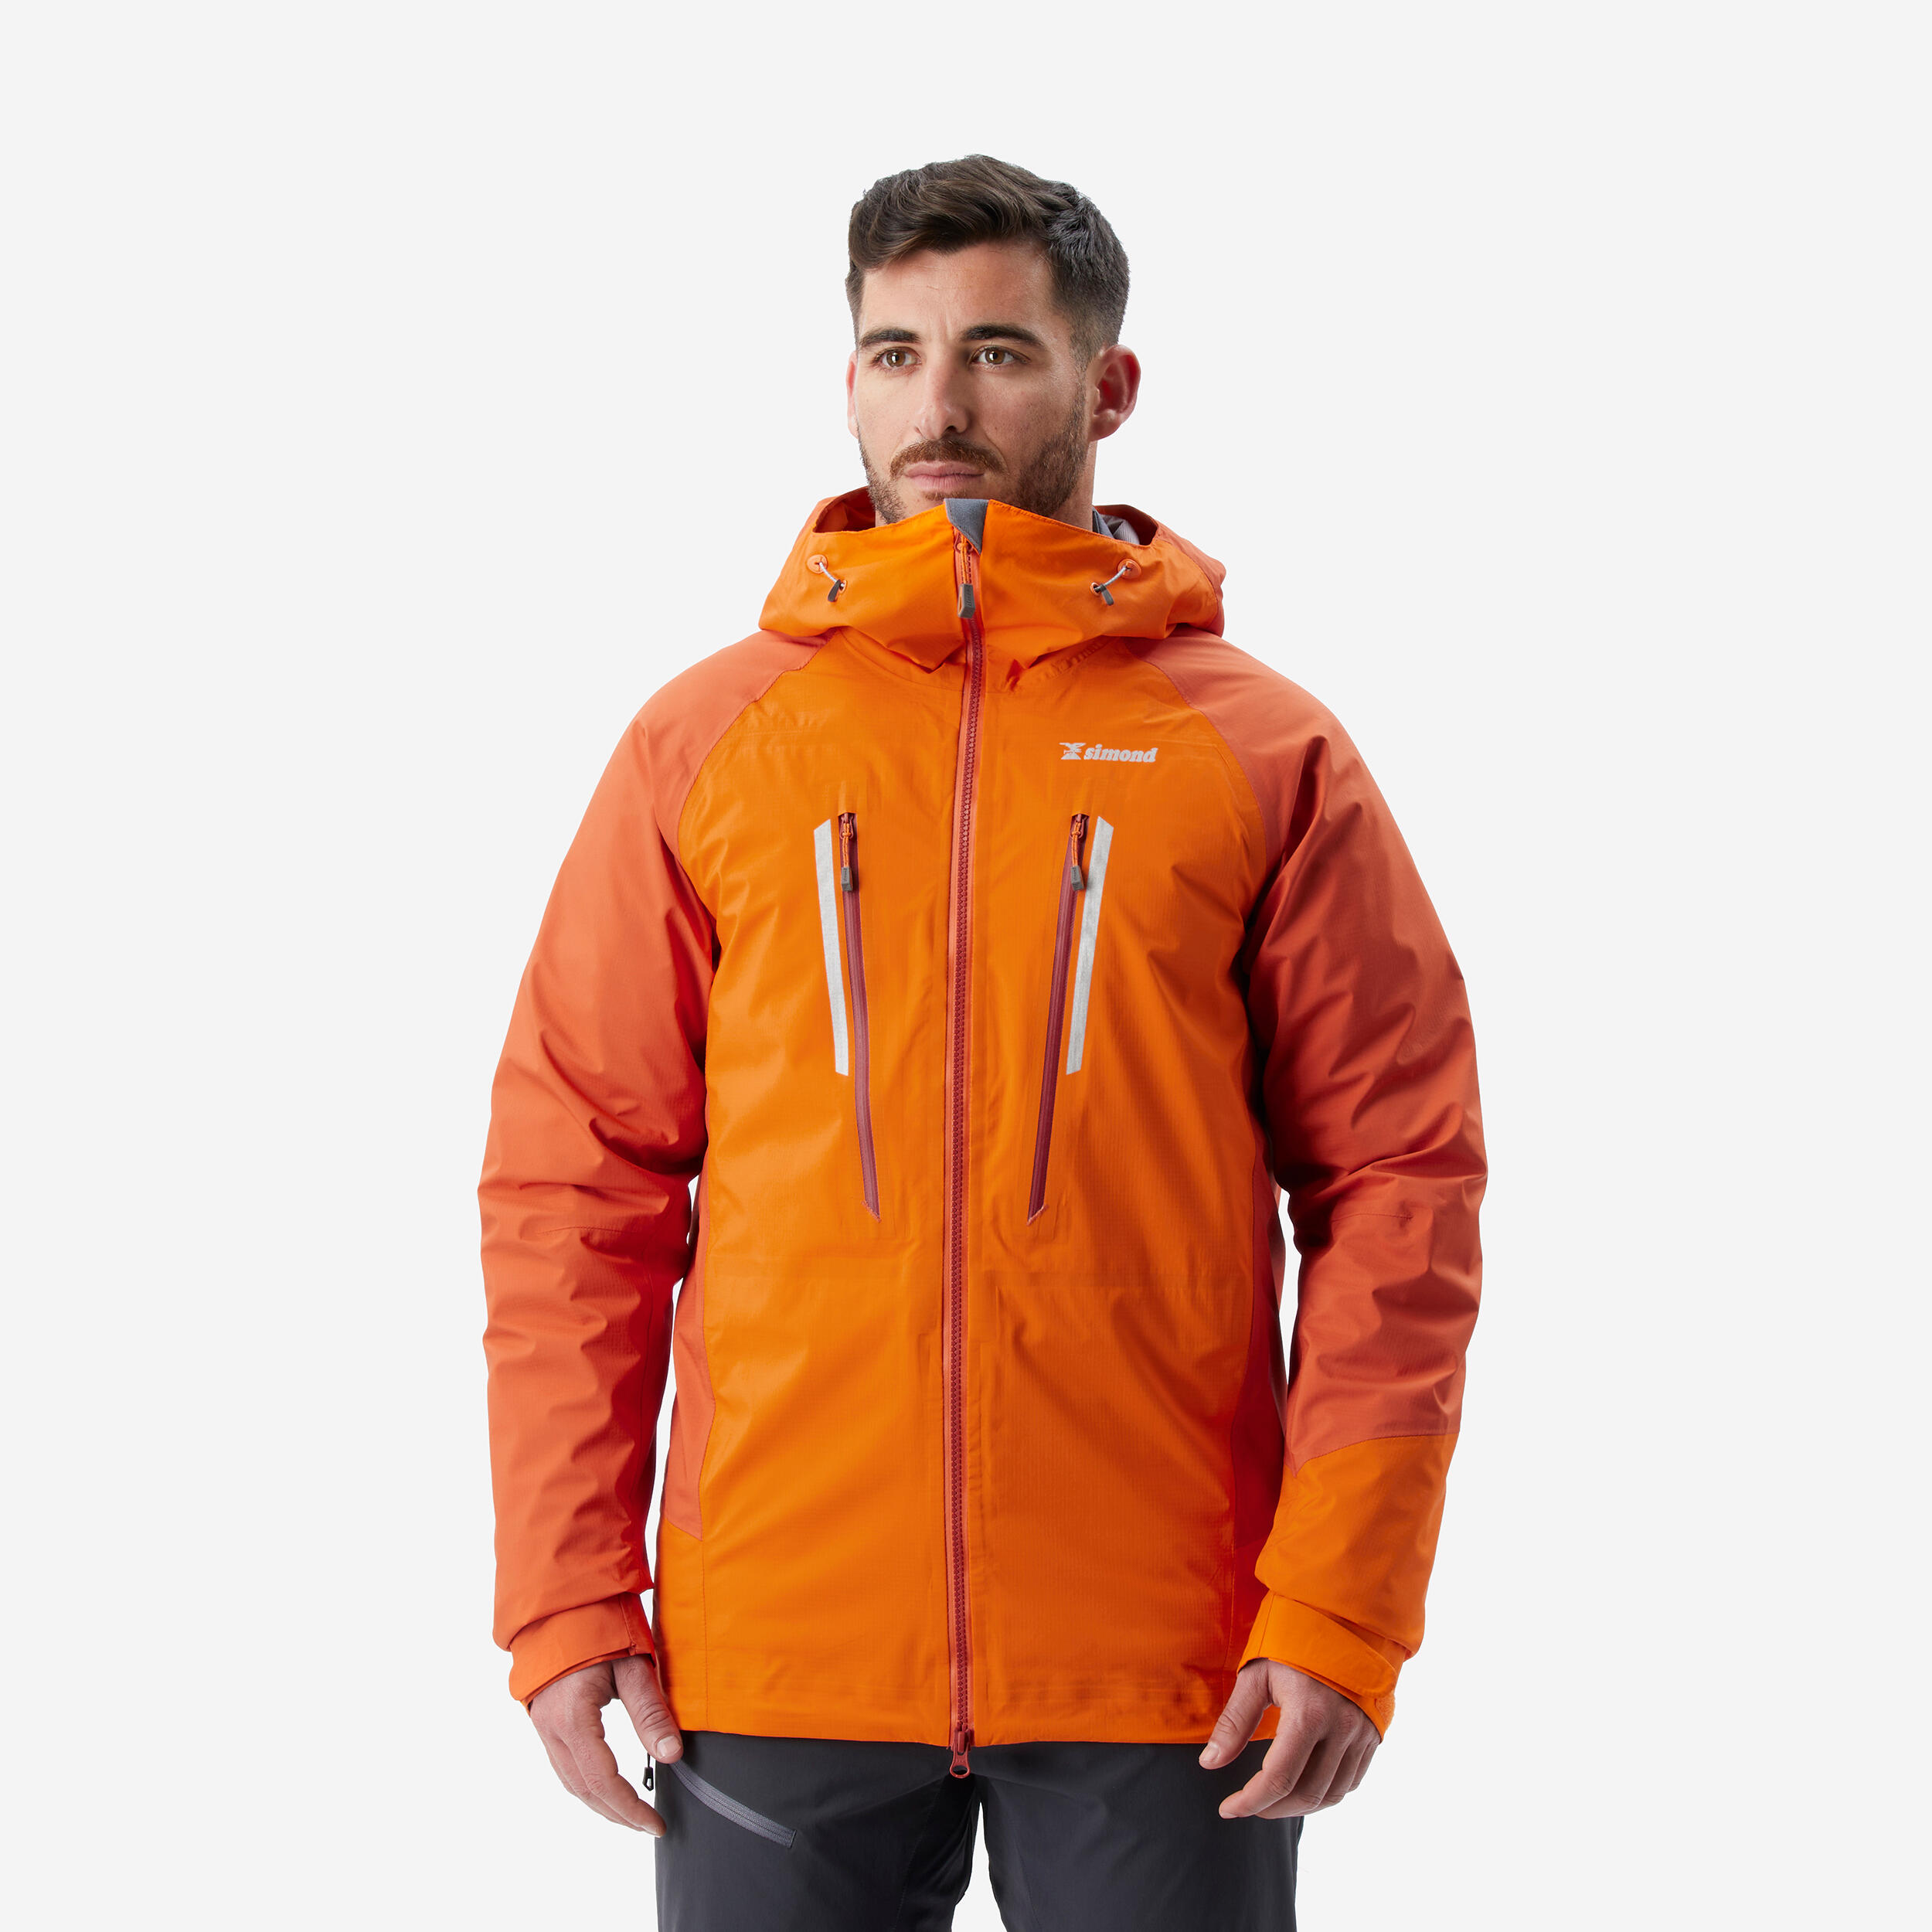 SIMOND Men's Mountaineering Waterproof Jacket - Alpinism Light Orange